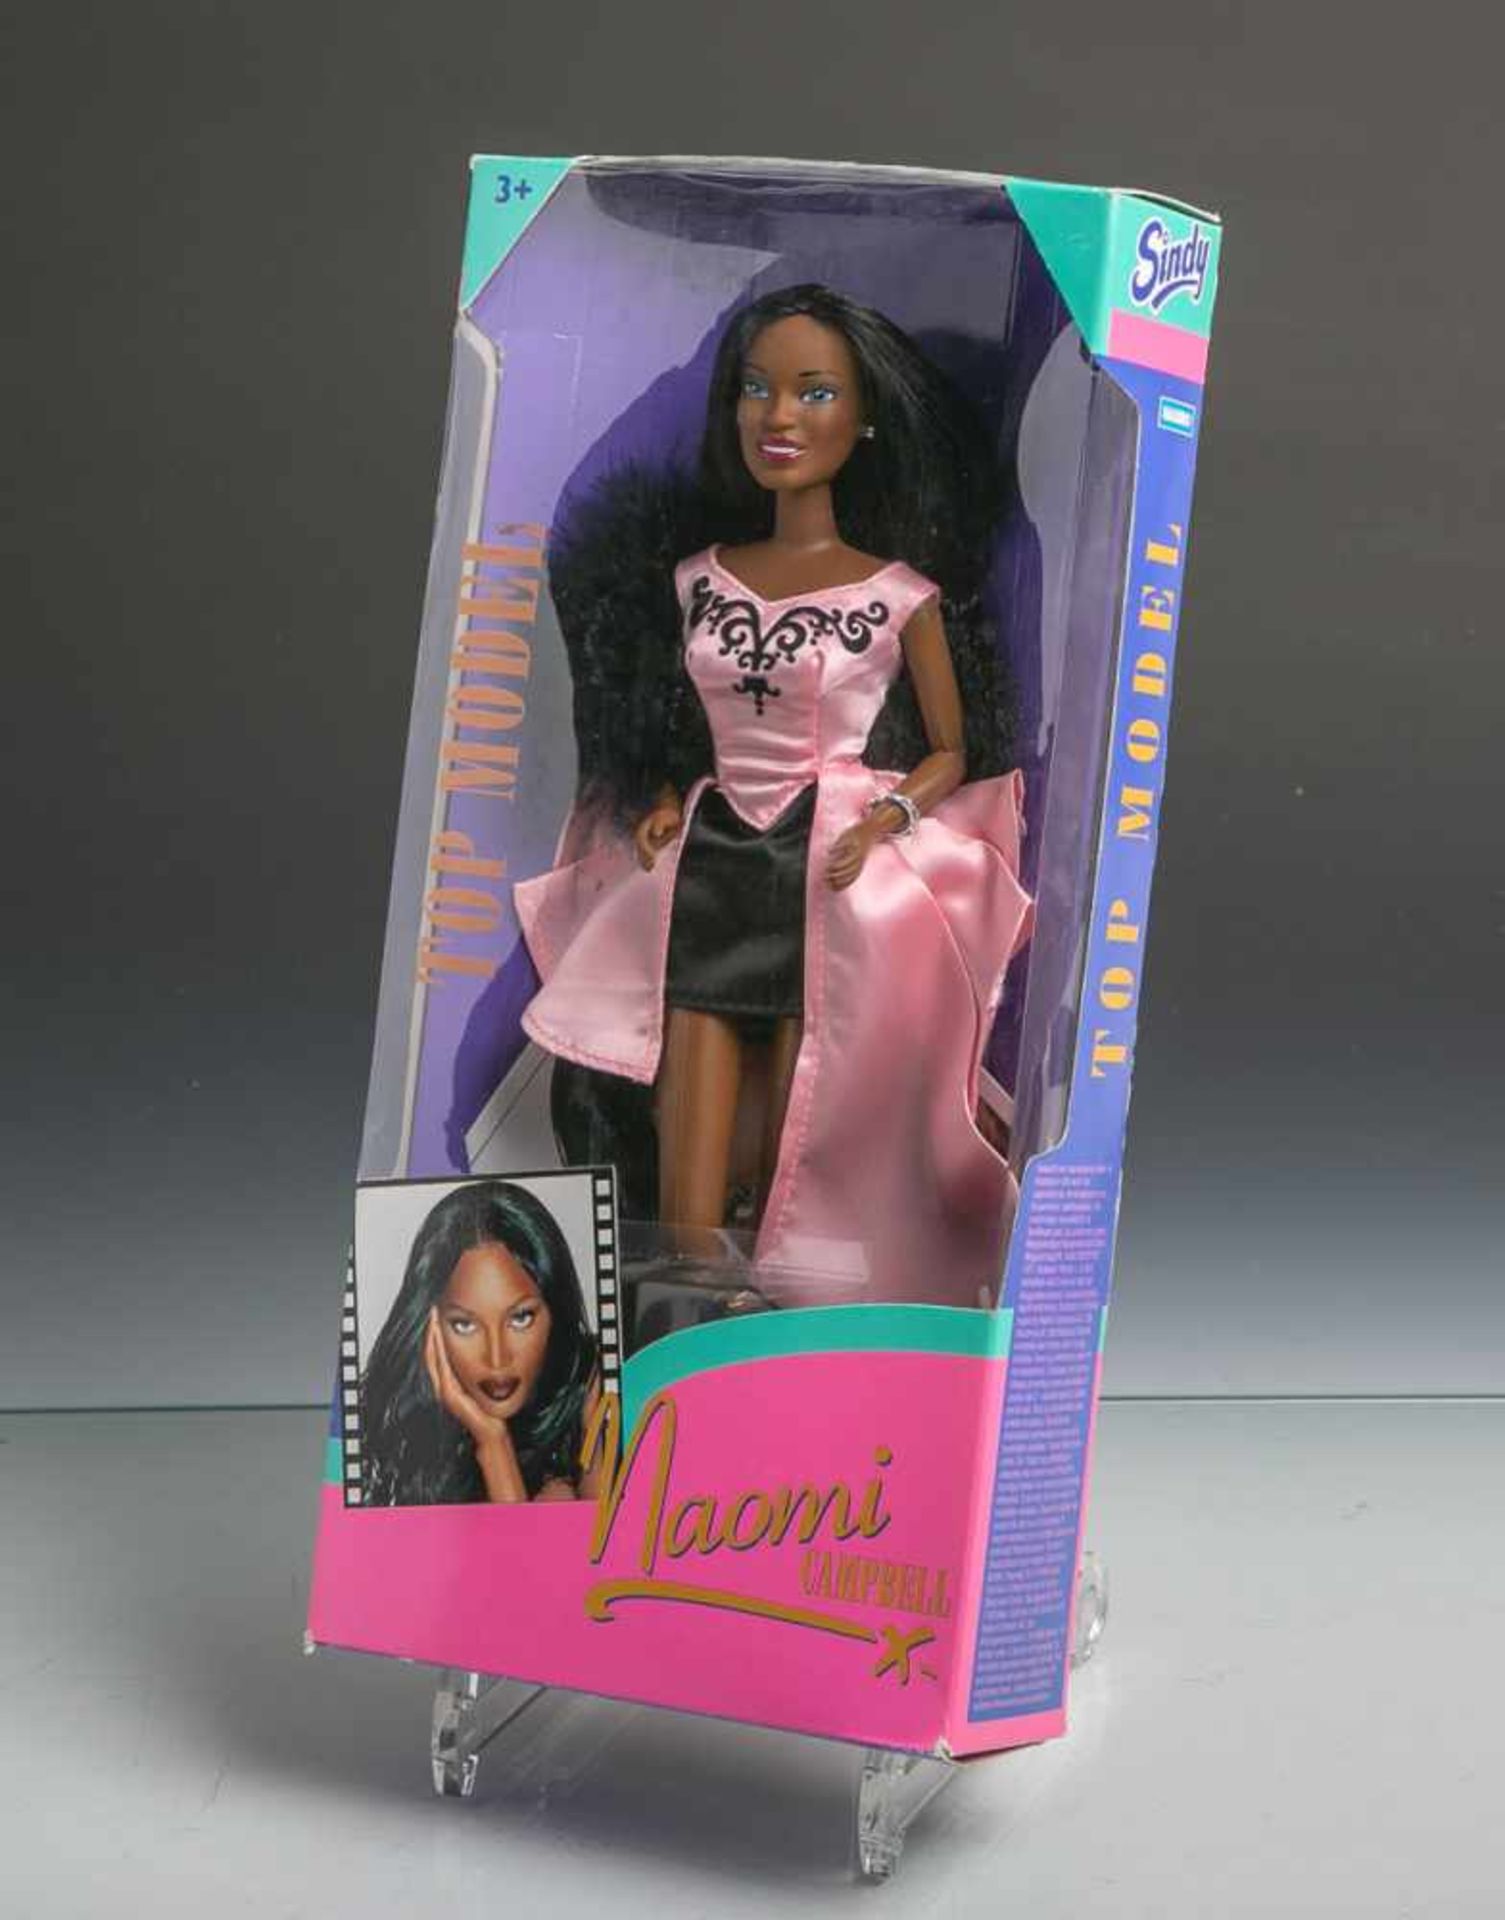 Modelpuppe "Naomi Campbell" (Hasbro, 1995), Top Model Collection, orig. Zubehör inkl.Infokarte u.